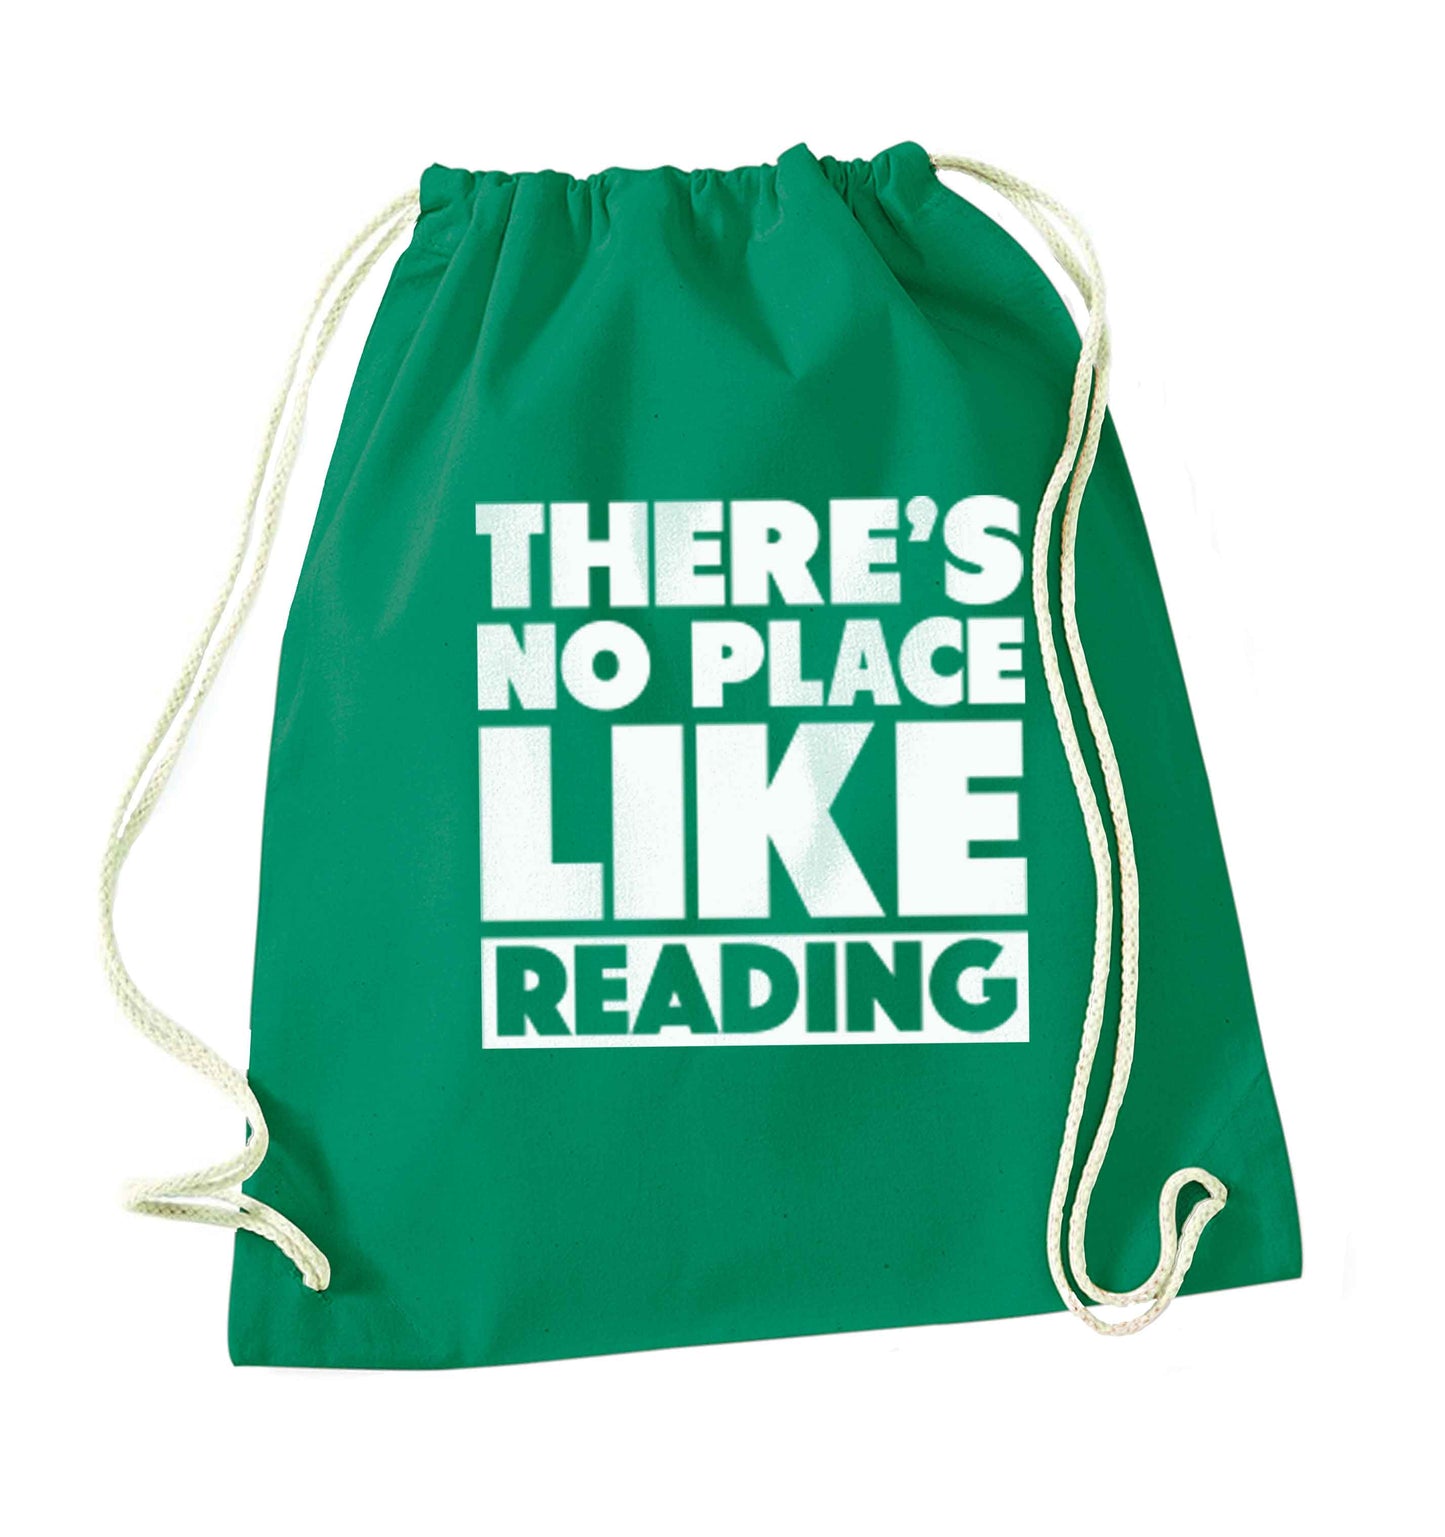 There's no place like Readinggreen drawstring bag